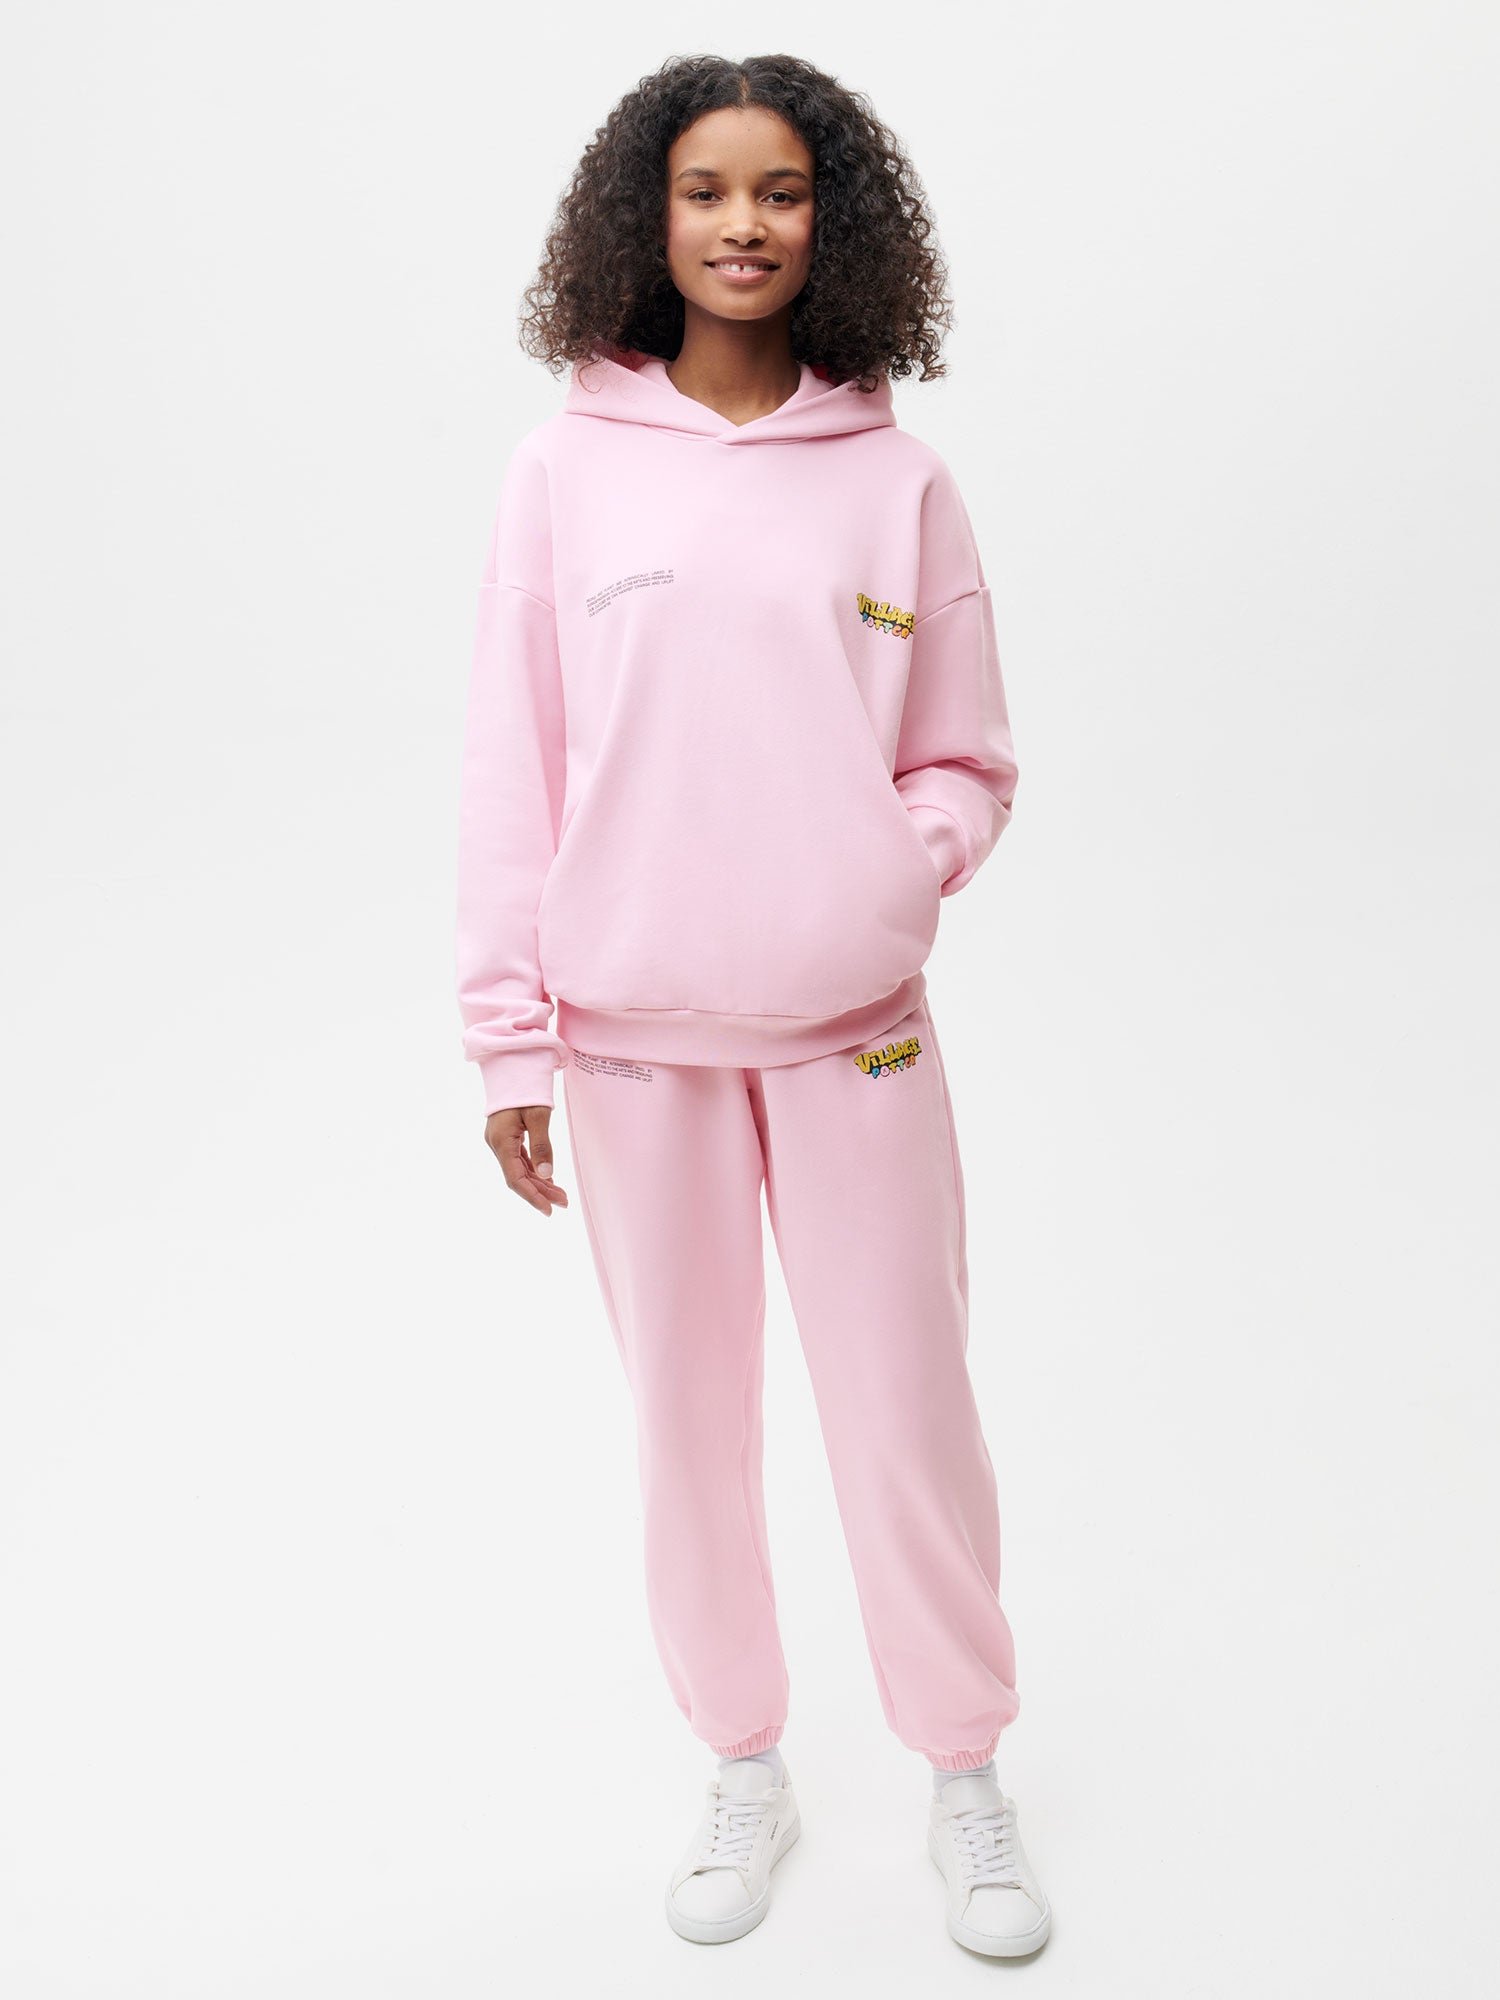 Pangaia Sweatpants - Pink Loungewear, Clothing - WPAAI24659